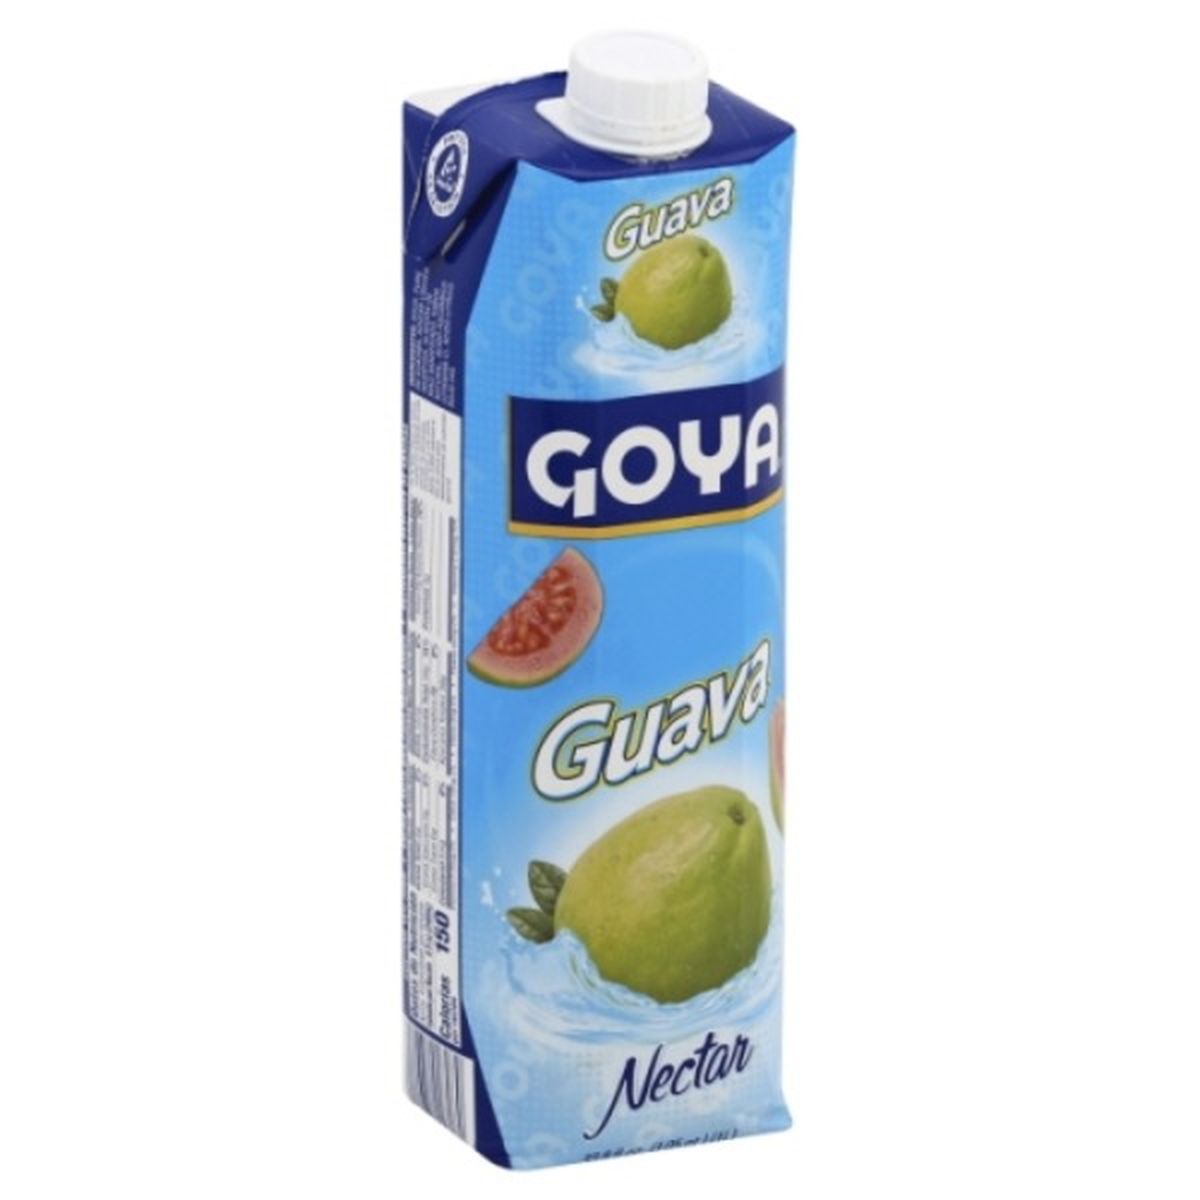 Calories in Goya Nectar, Guava